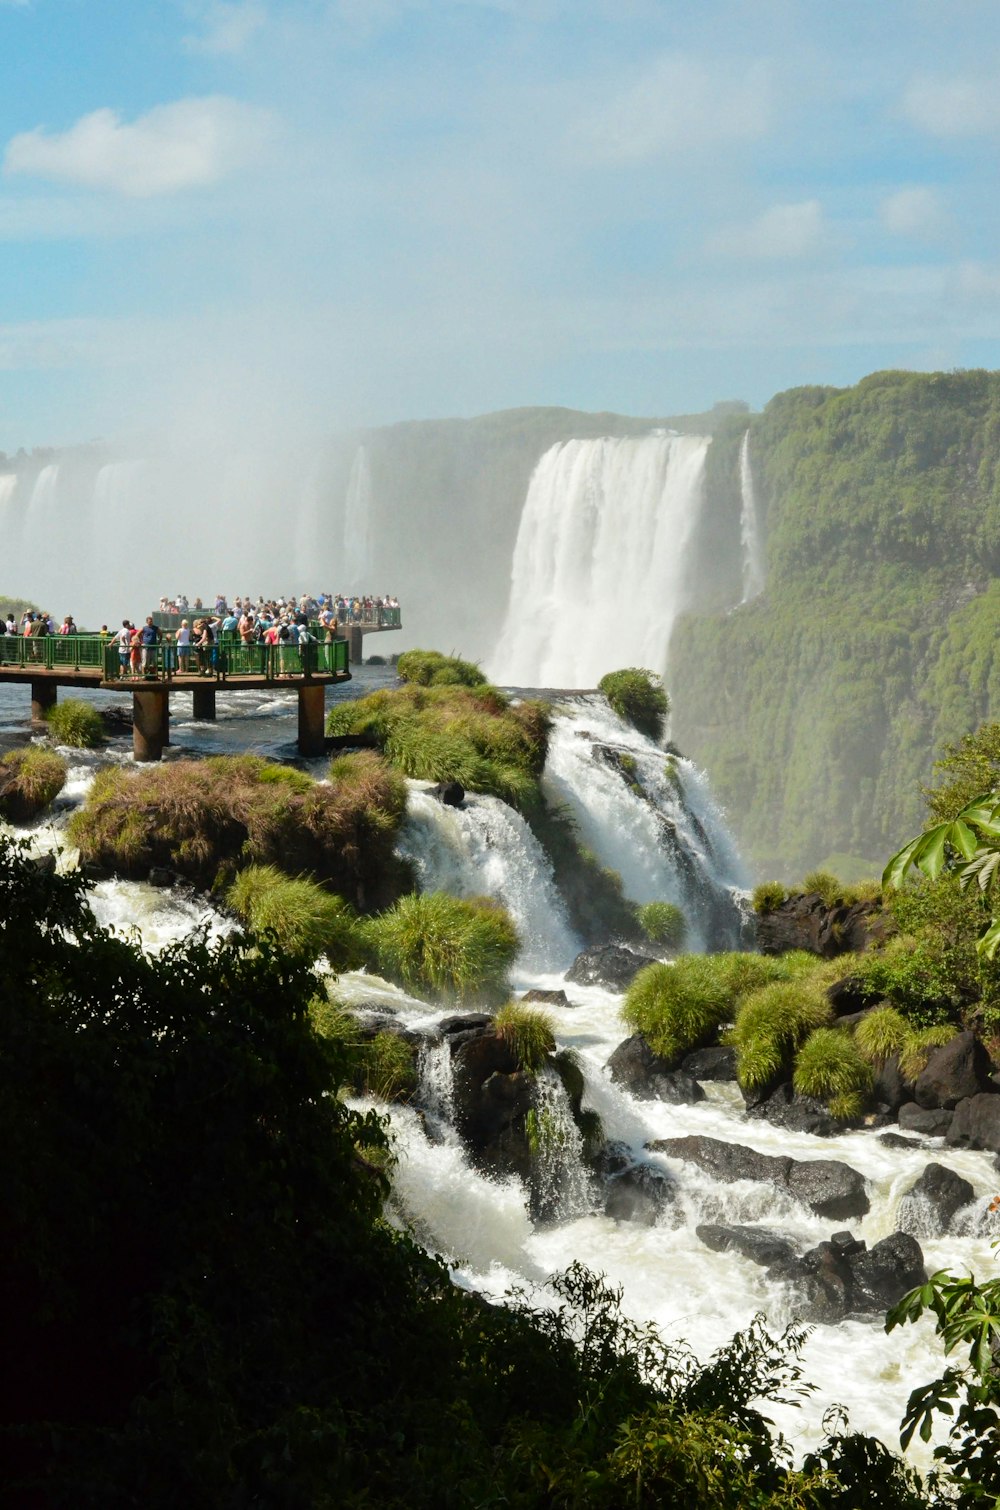 people standing on wooden bridge over waterfalls during daytime